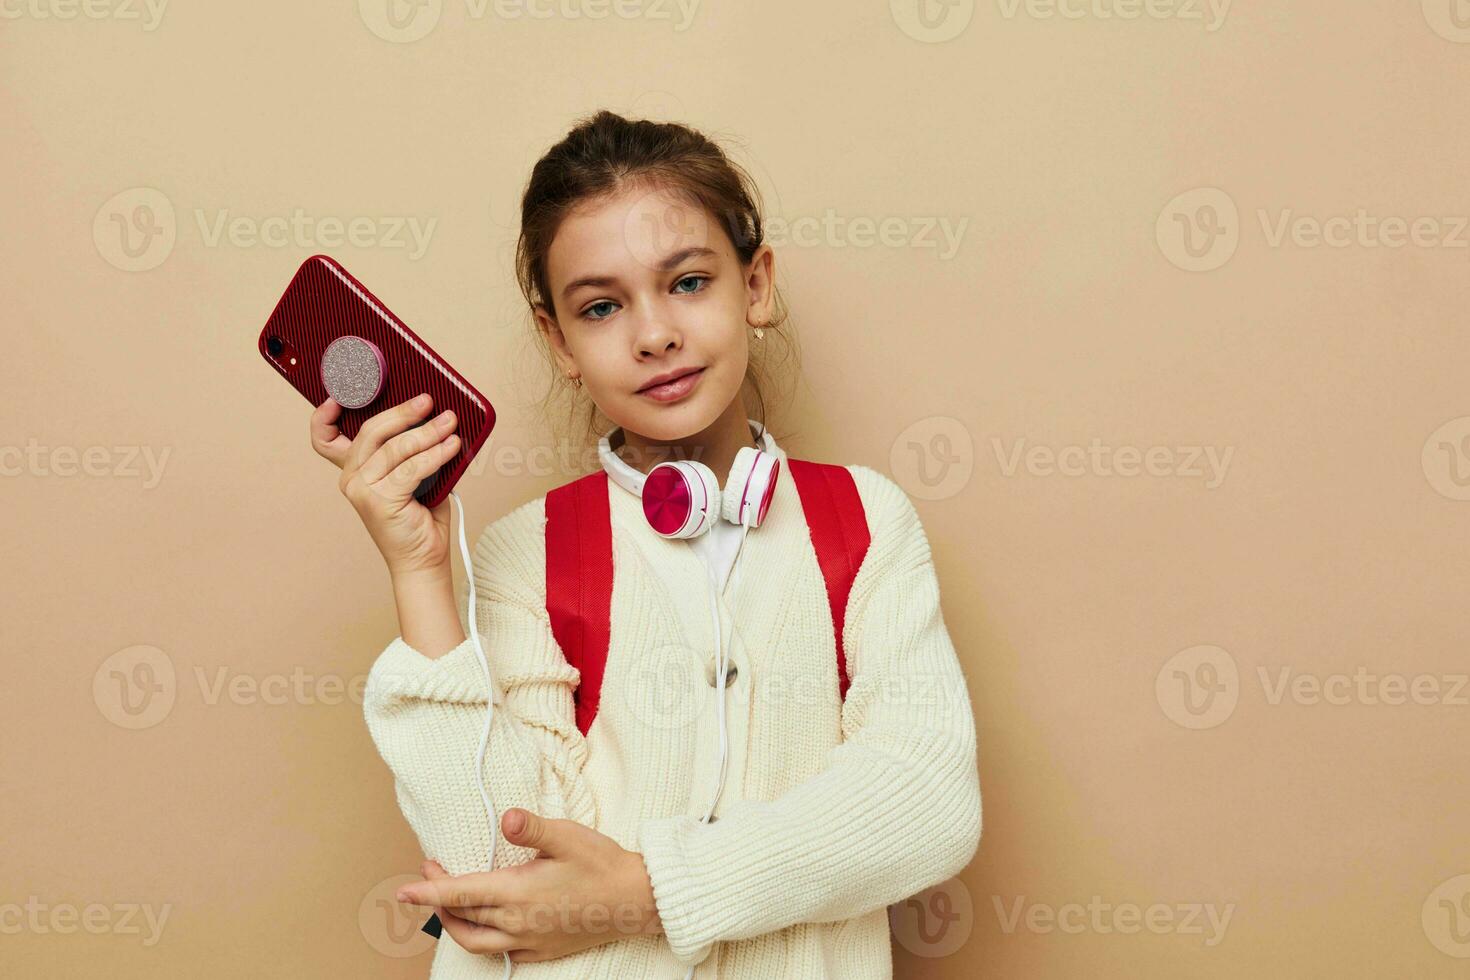 pequeño niña con teléfono posando rojo mochila infancia inalterado foto